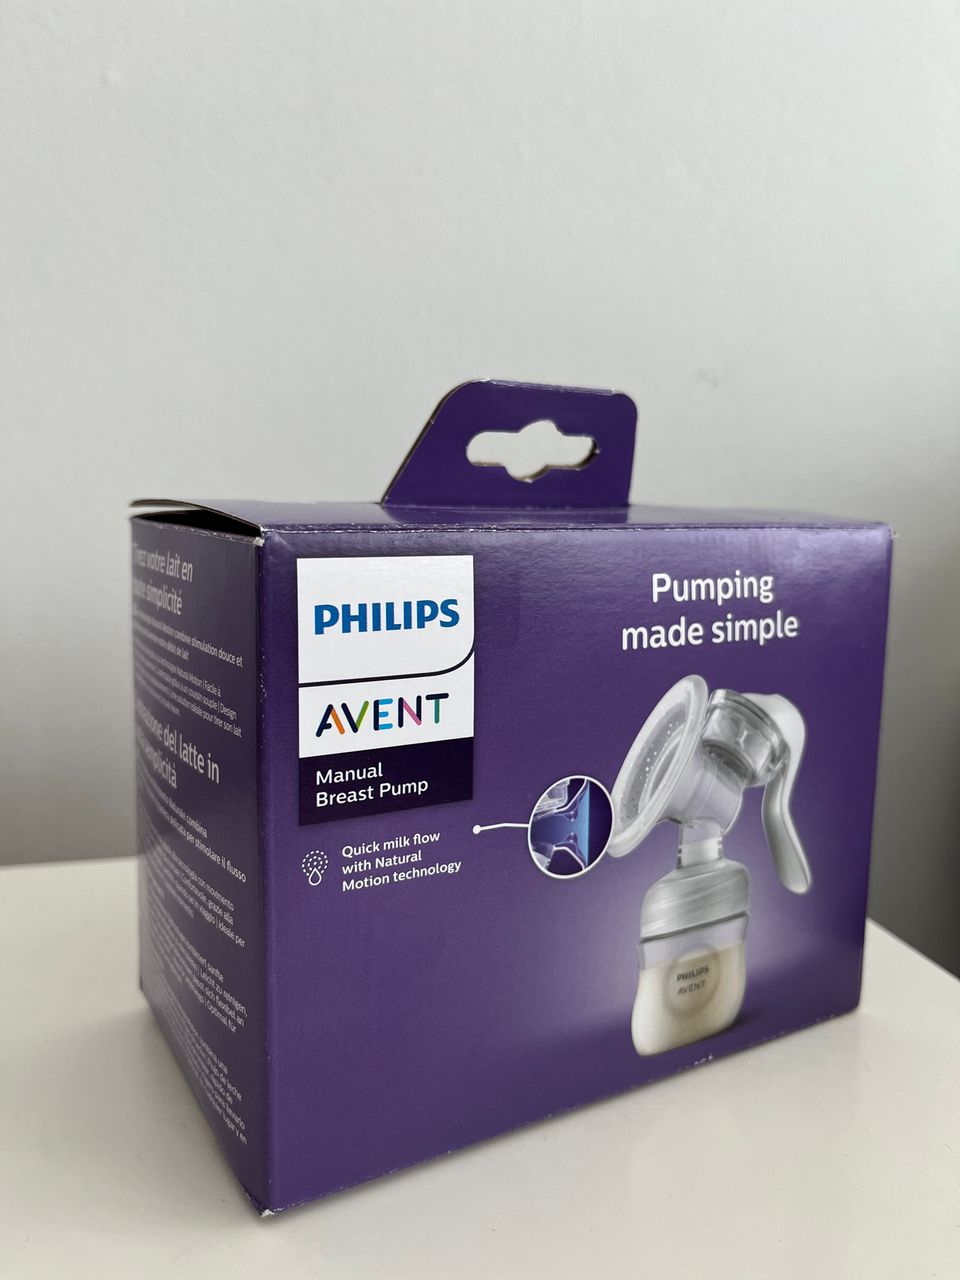 Philips Avent manual brest pump